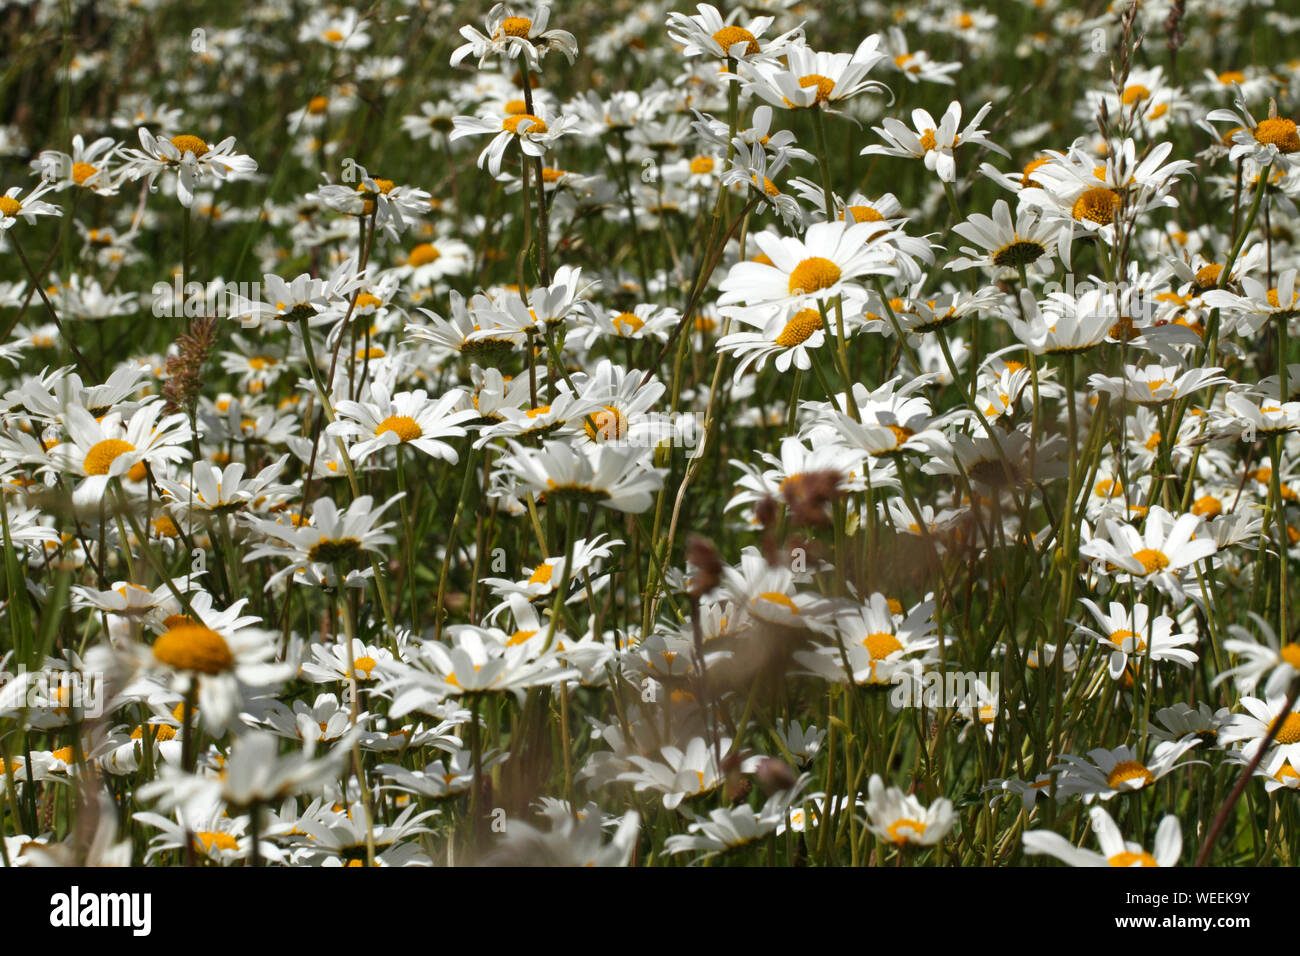 Bank of Ox-eye daisy flowers. Stock Photo